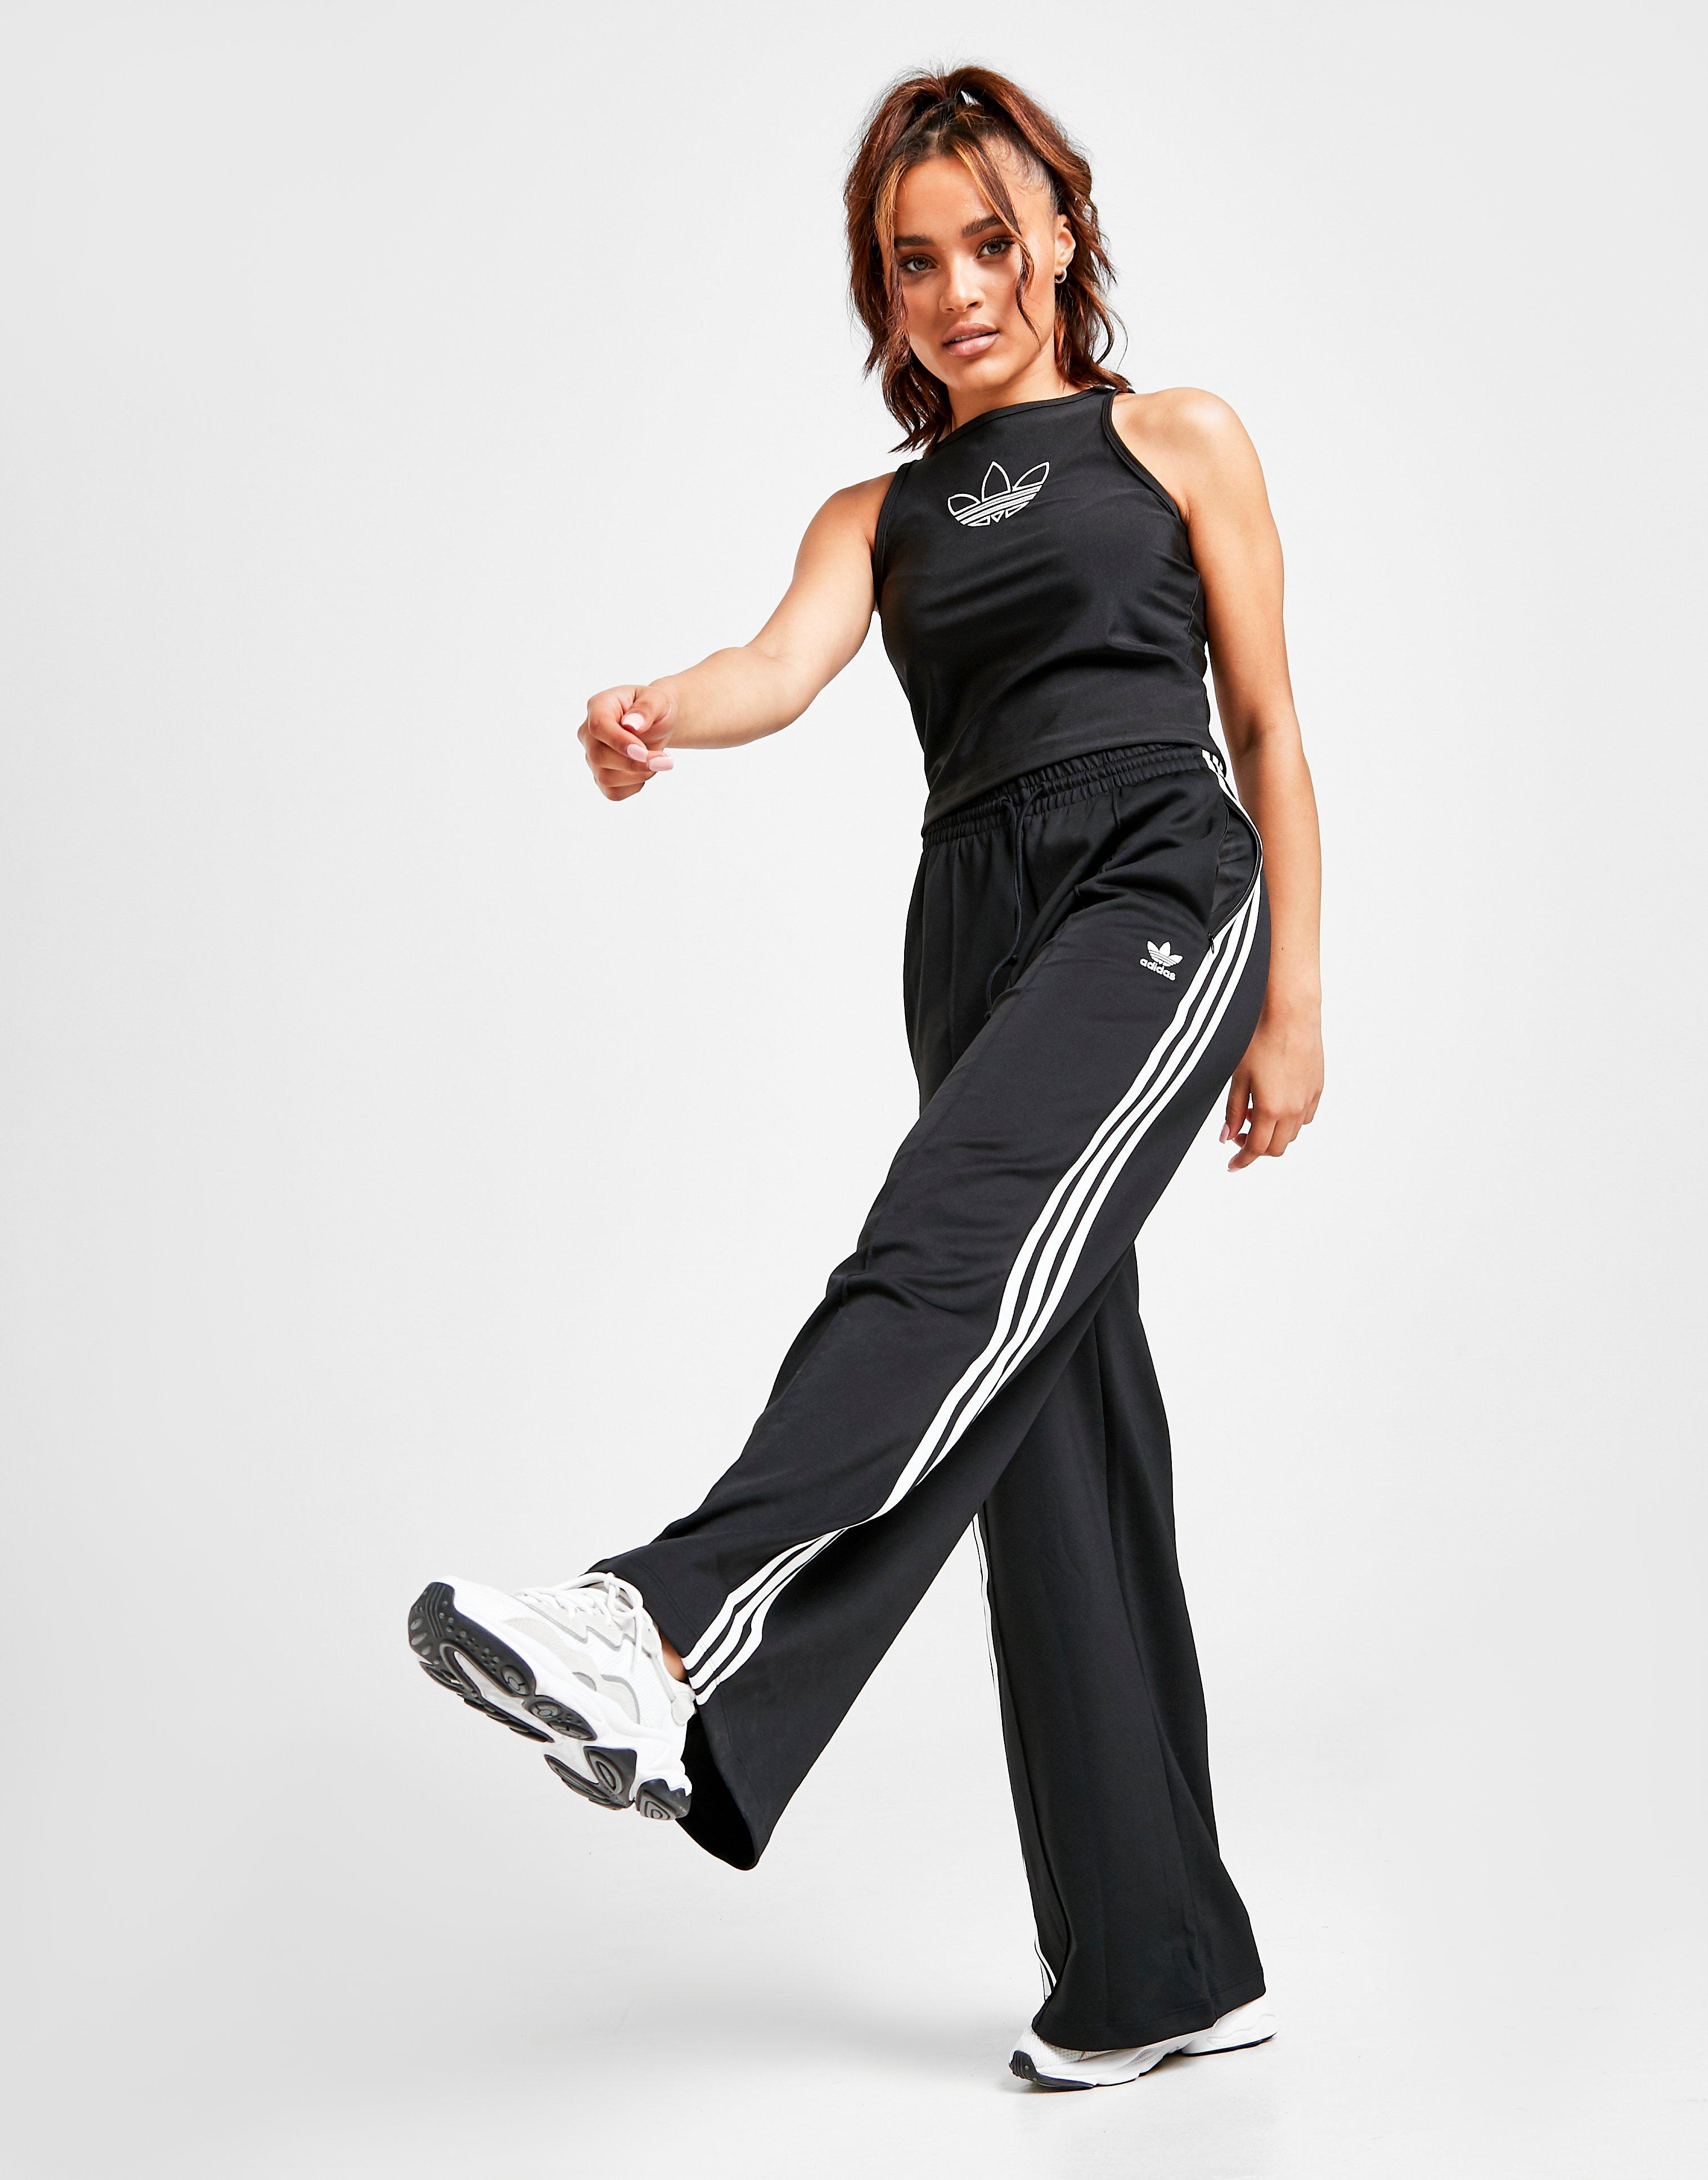 adidas female joggers